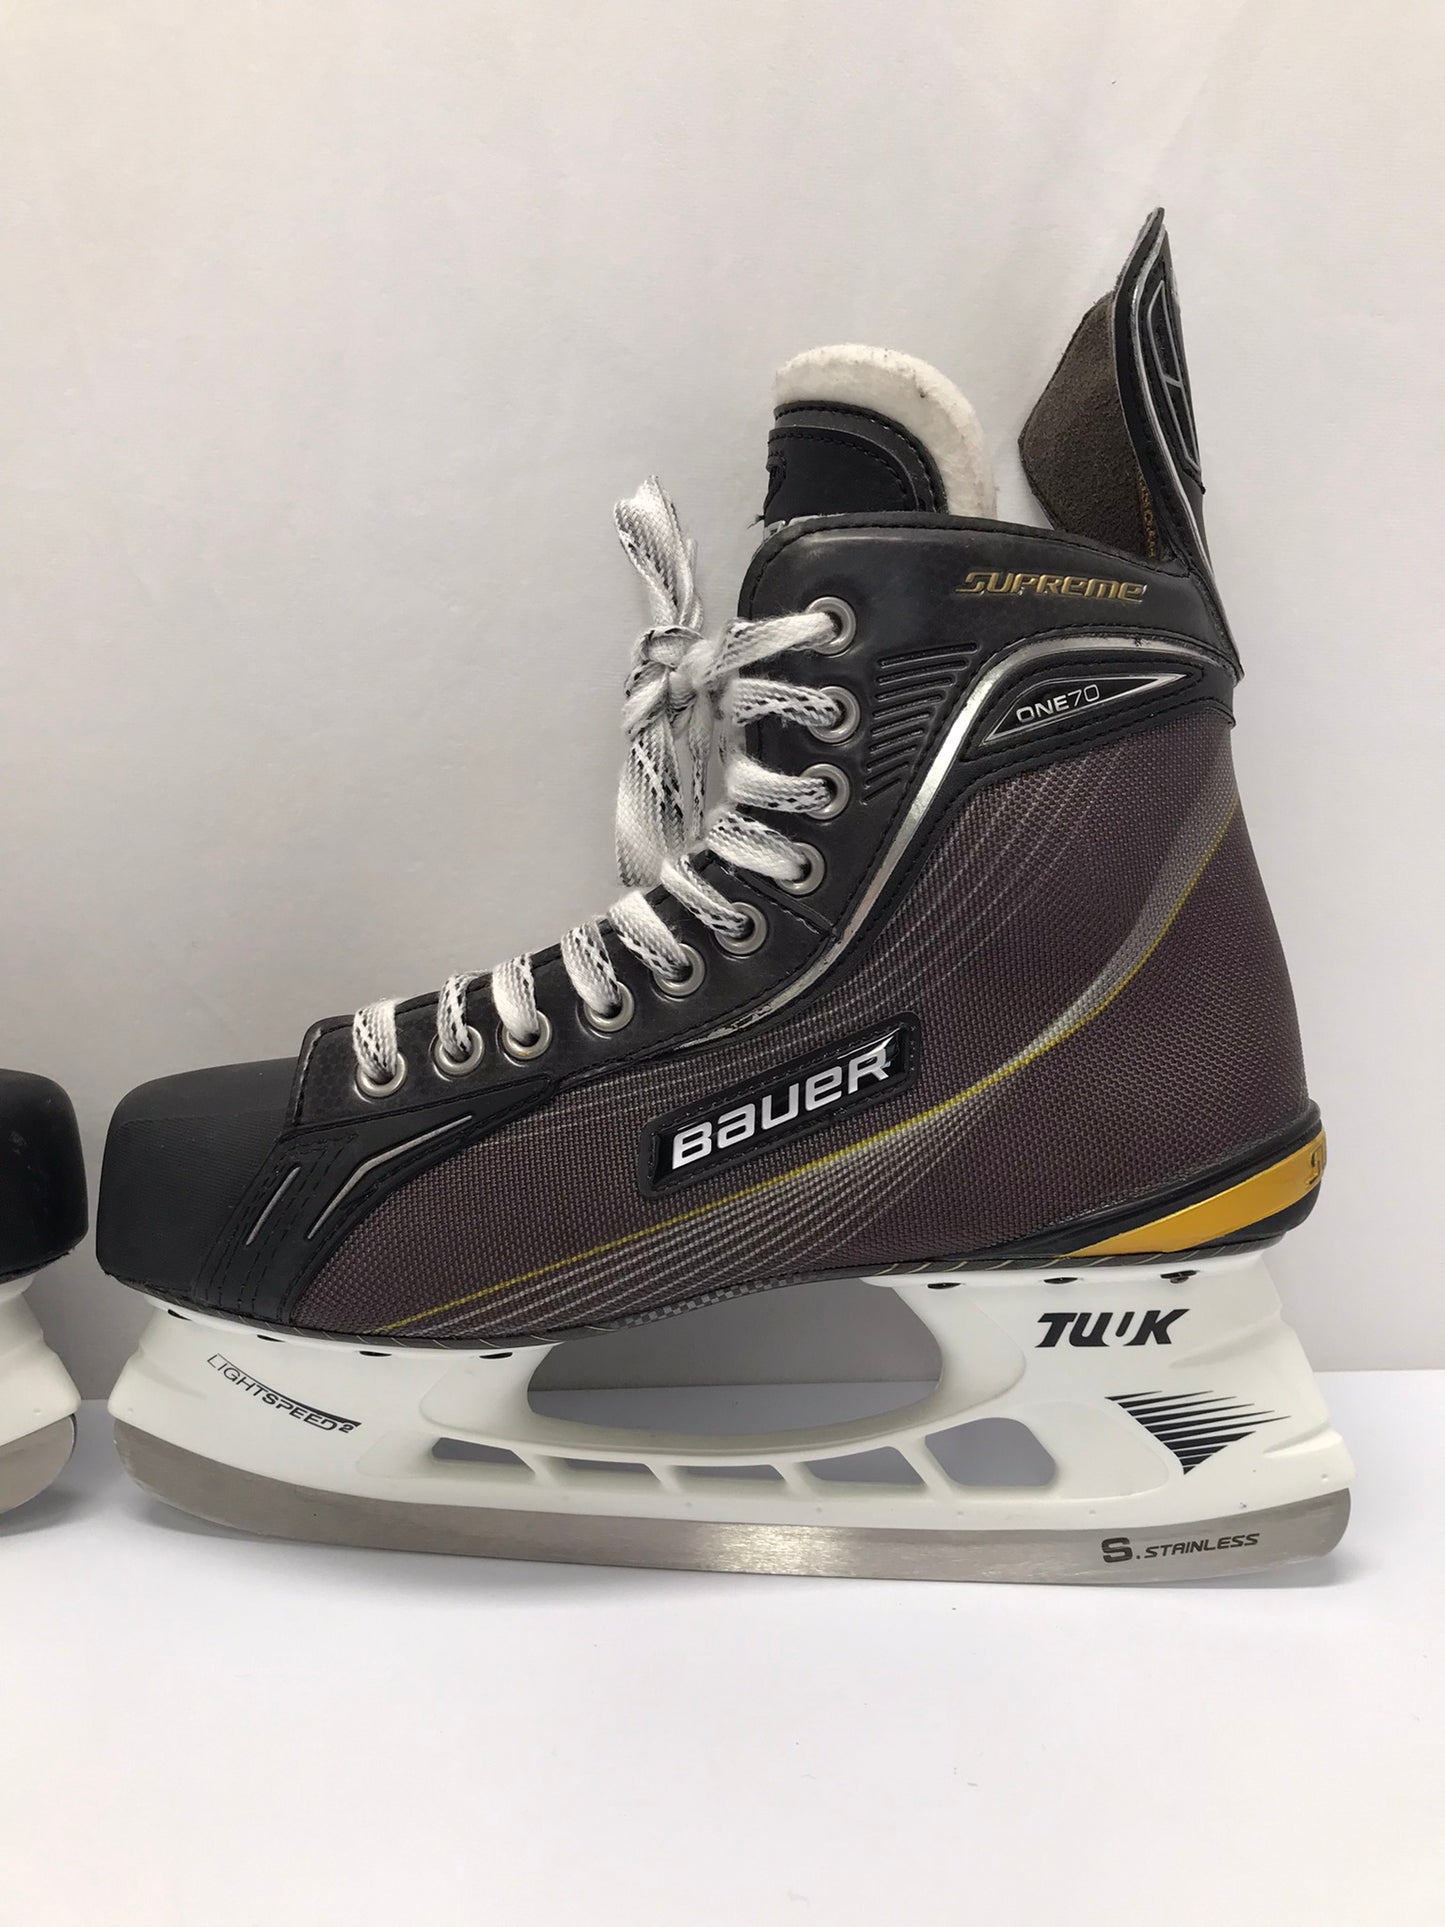 Hockey Skates Men's Size 11 Shoe Size Bauer Supreme One70 New Demo Model